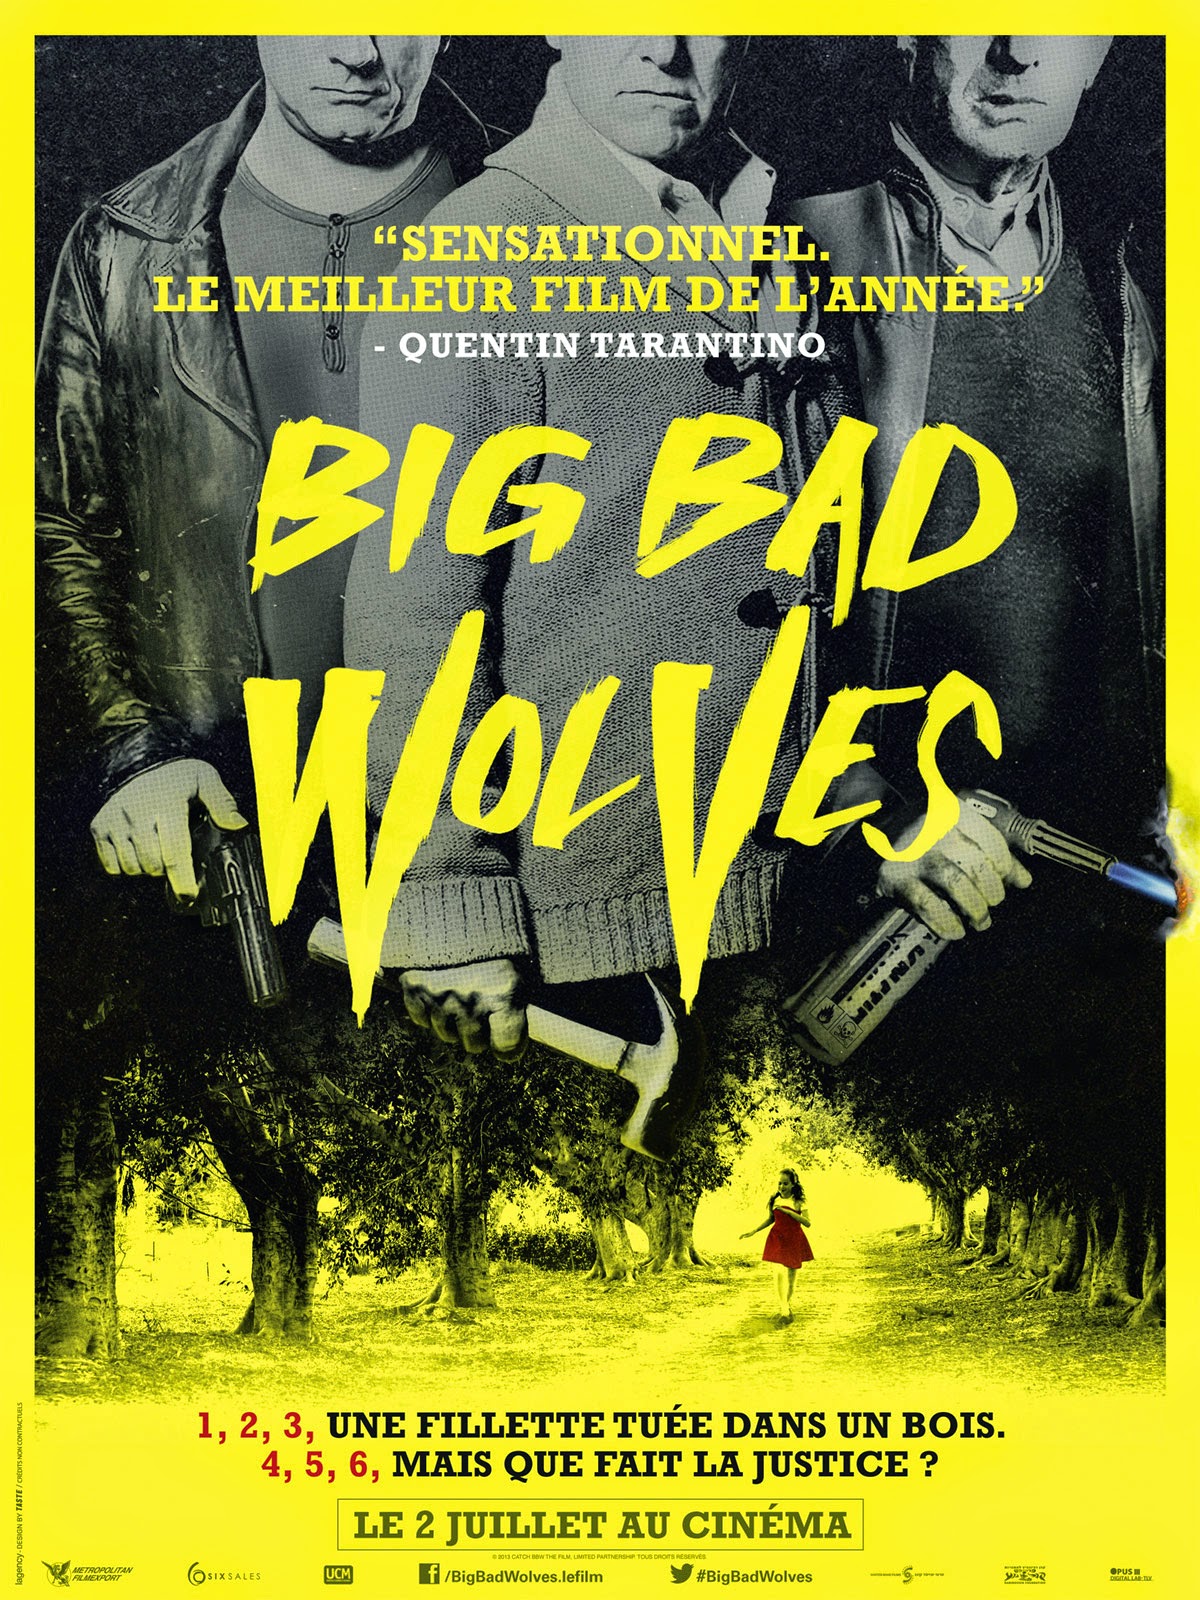 http://fuckingcinephiles.blogspot.fr/2014/07/critique-big-bad-wolves.html